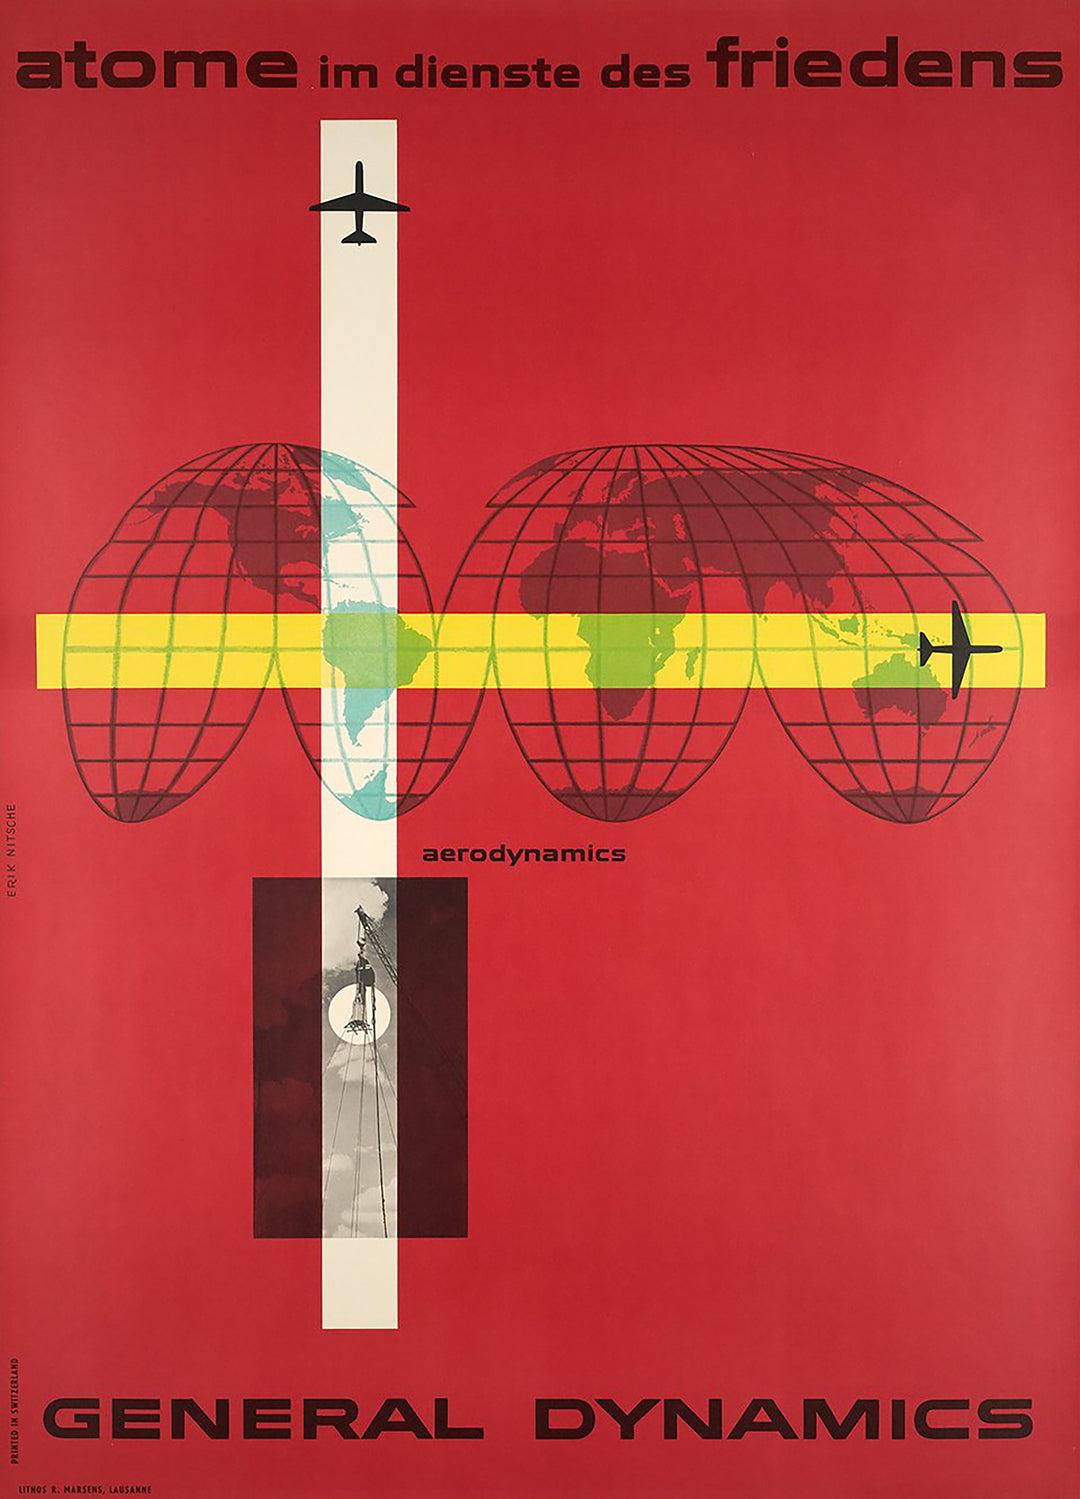 General Dynamics Original Vintage Poster - Astrodynamics Red by Erik Nitsche 1955